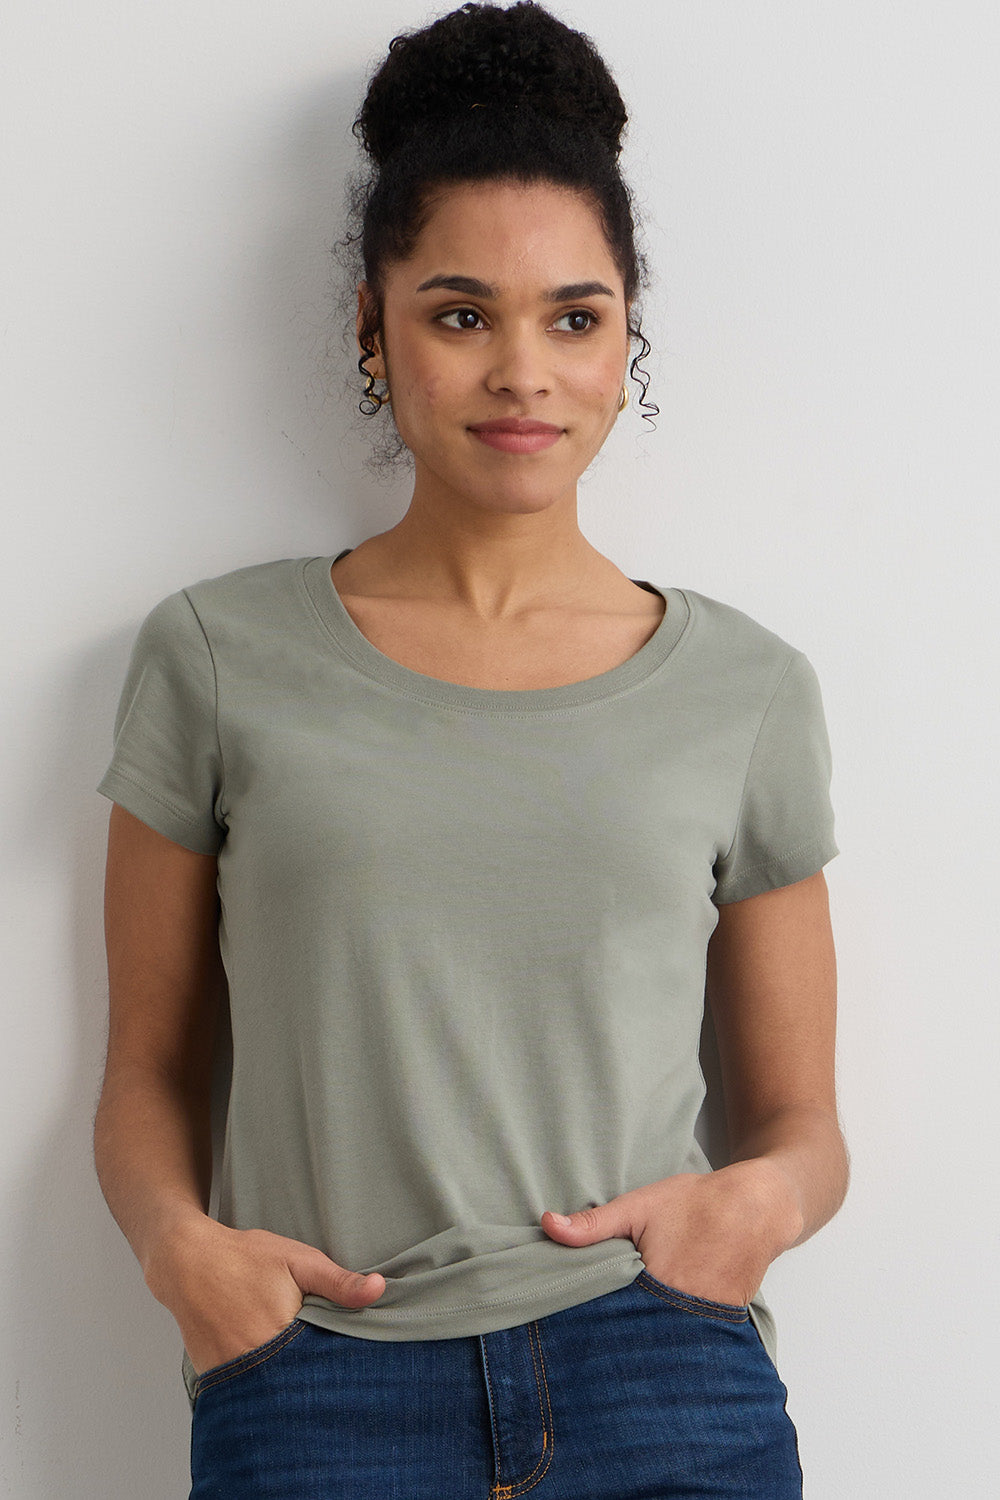 Scoop Neck Tshirt - Brown Organic Cotton - Women's Clothing